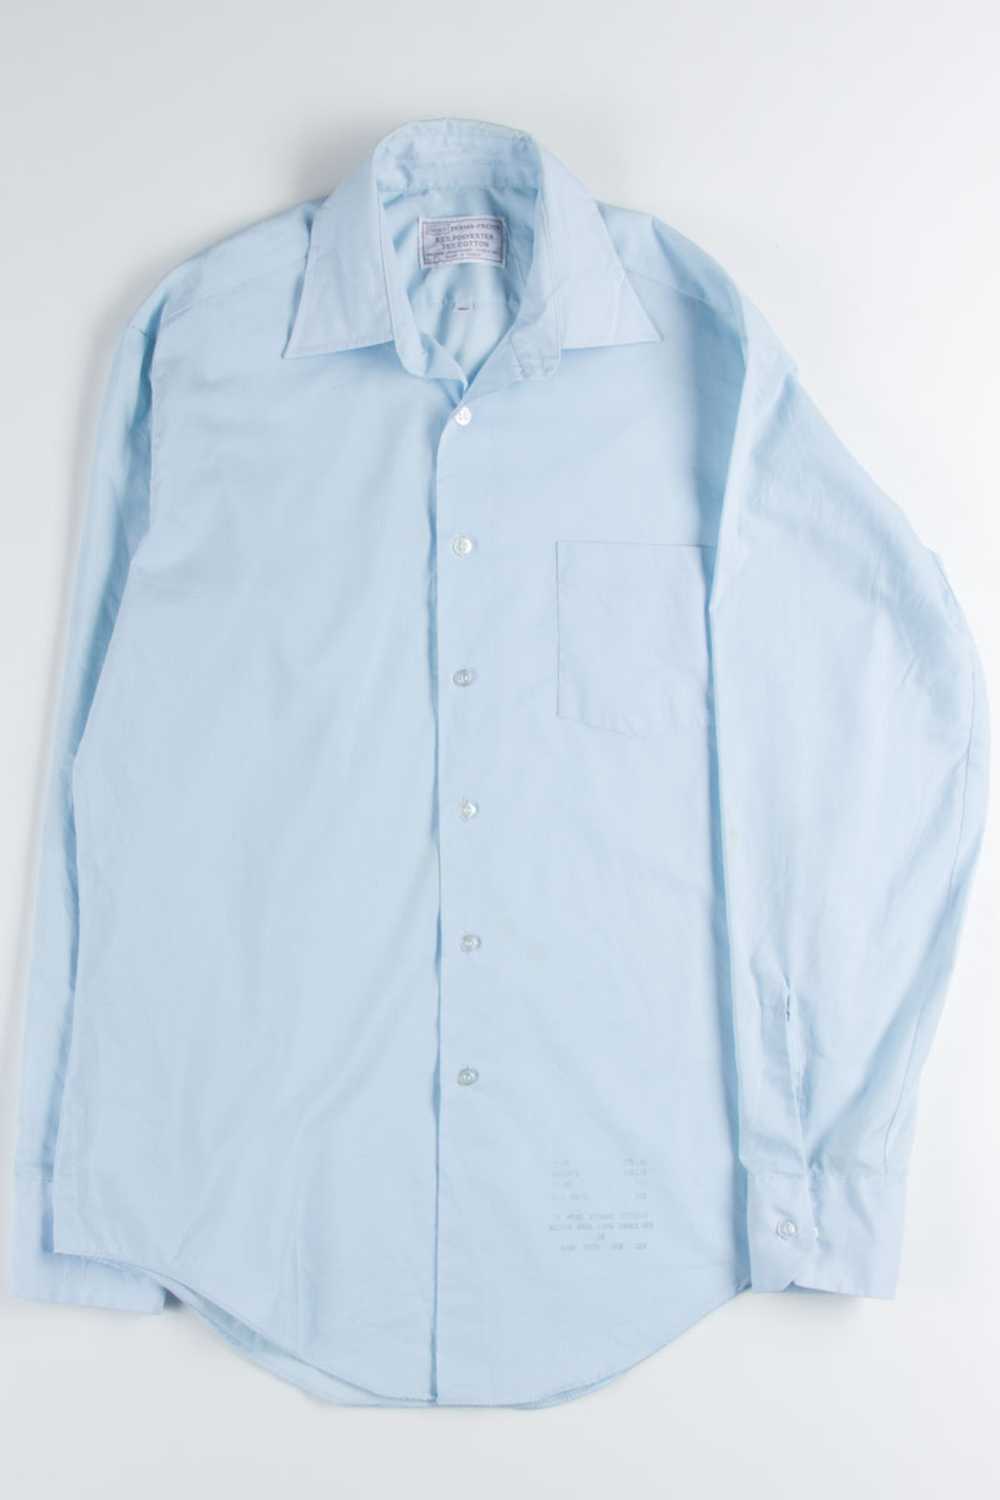 Vintage Light Blue Button Up Shirt - image 6